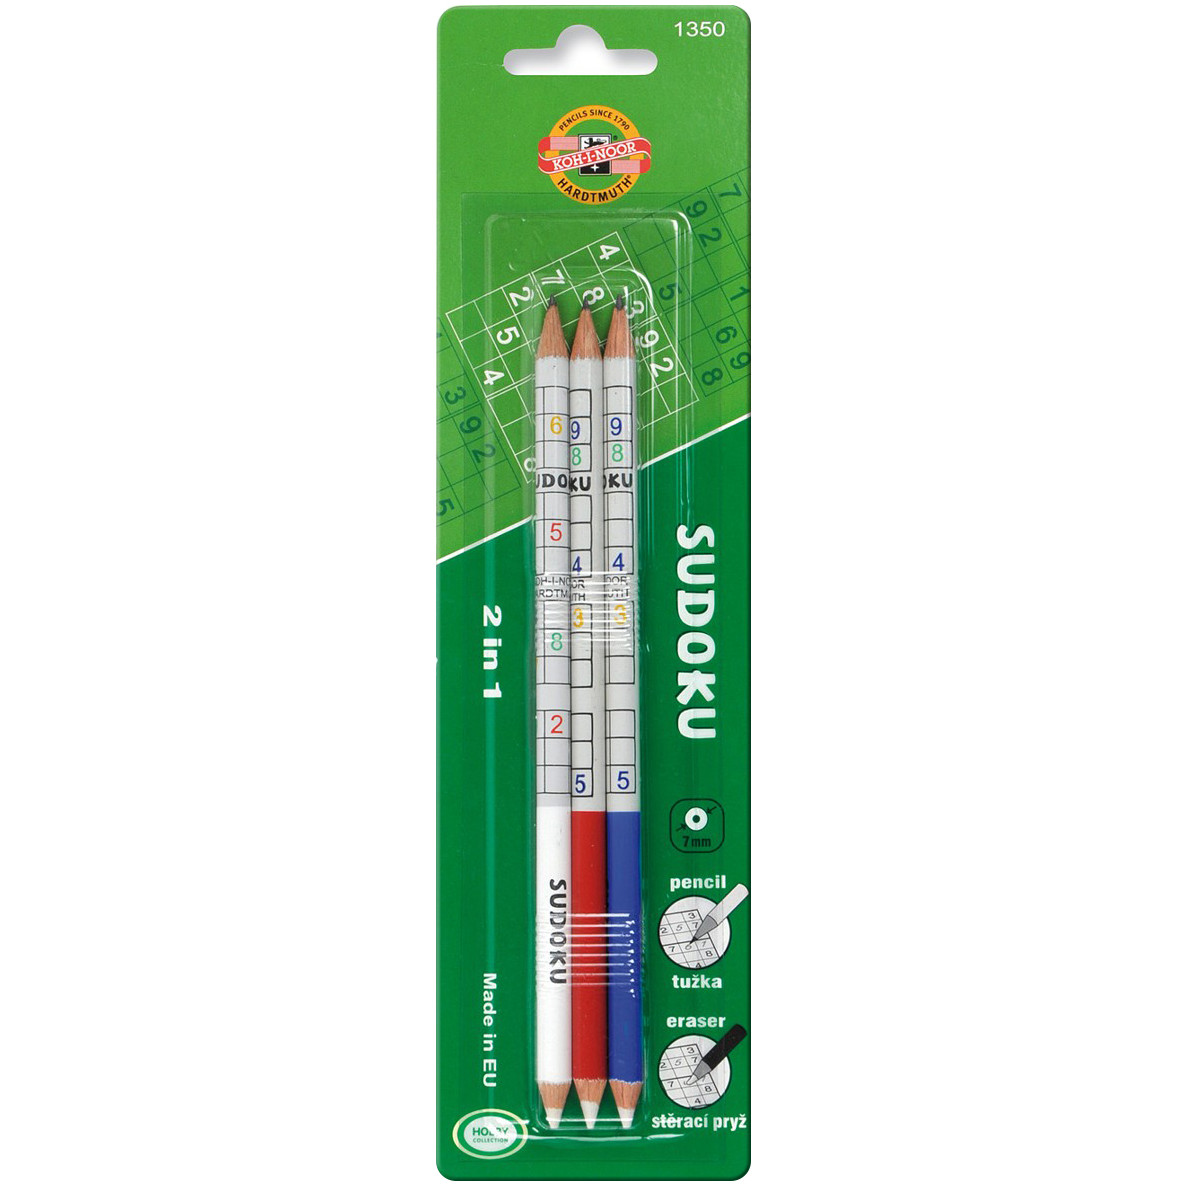 Koh-I-Noor Sudoku Pencil with Eraser - 2B (Pack of 3)